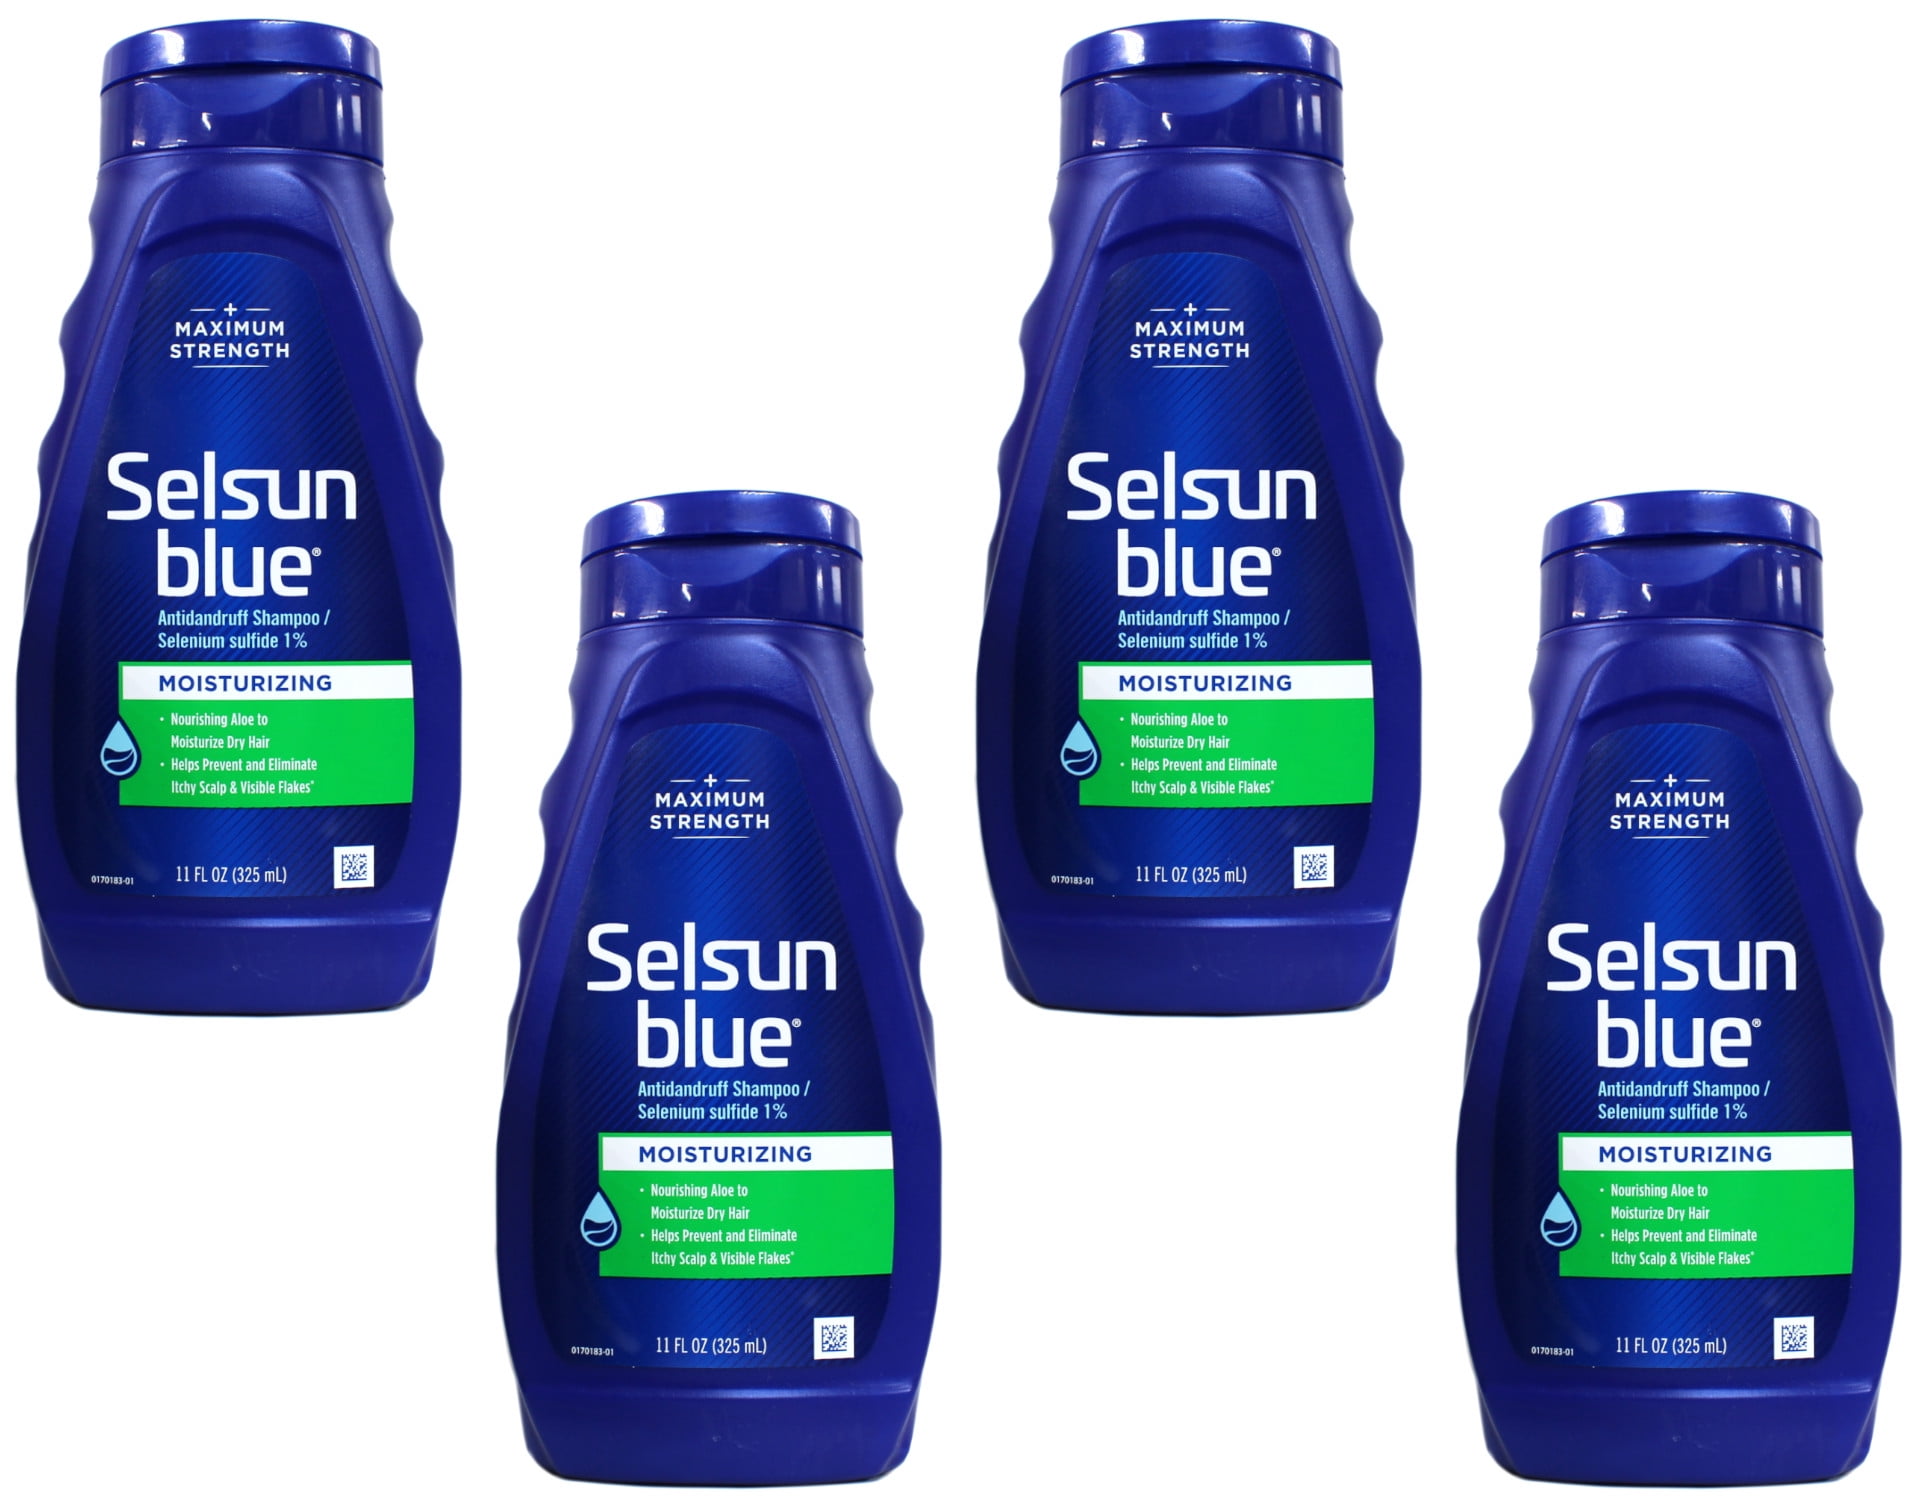 Selsun Blue Moisturizing Dandruff Shampoo - wide 1